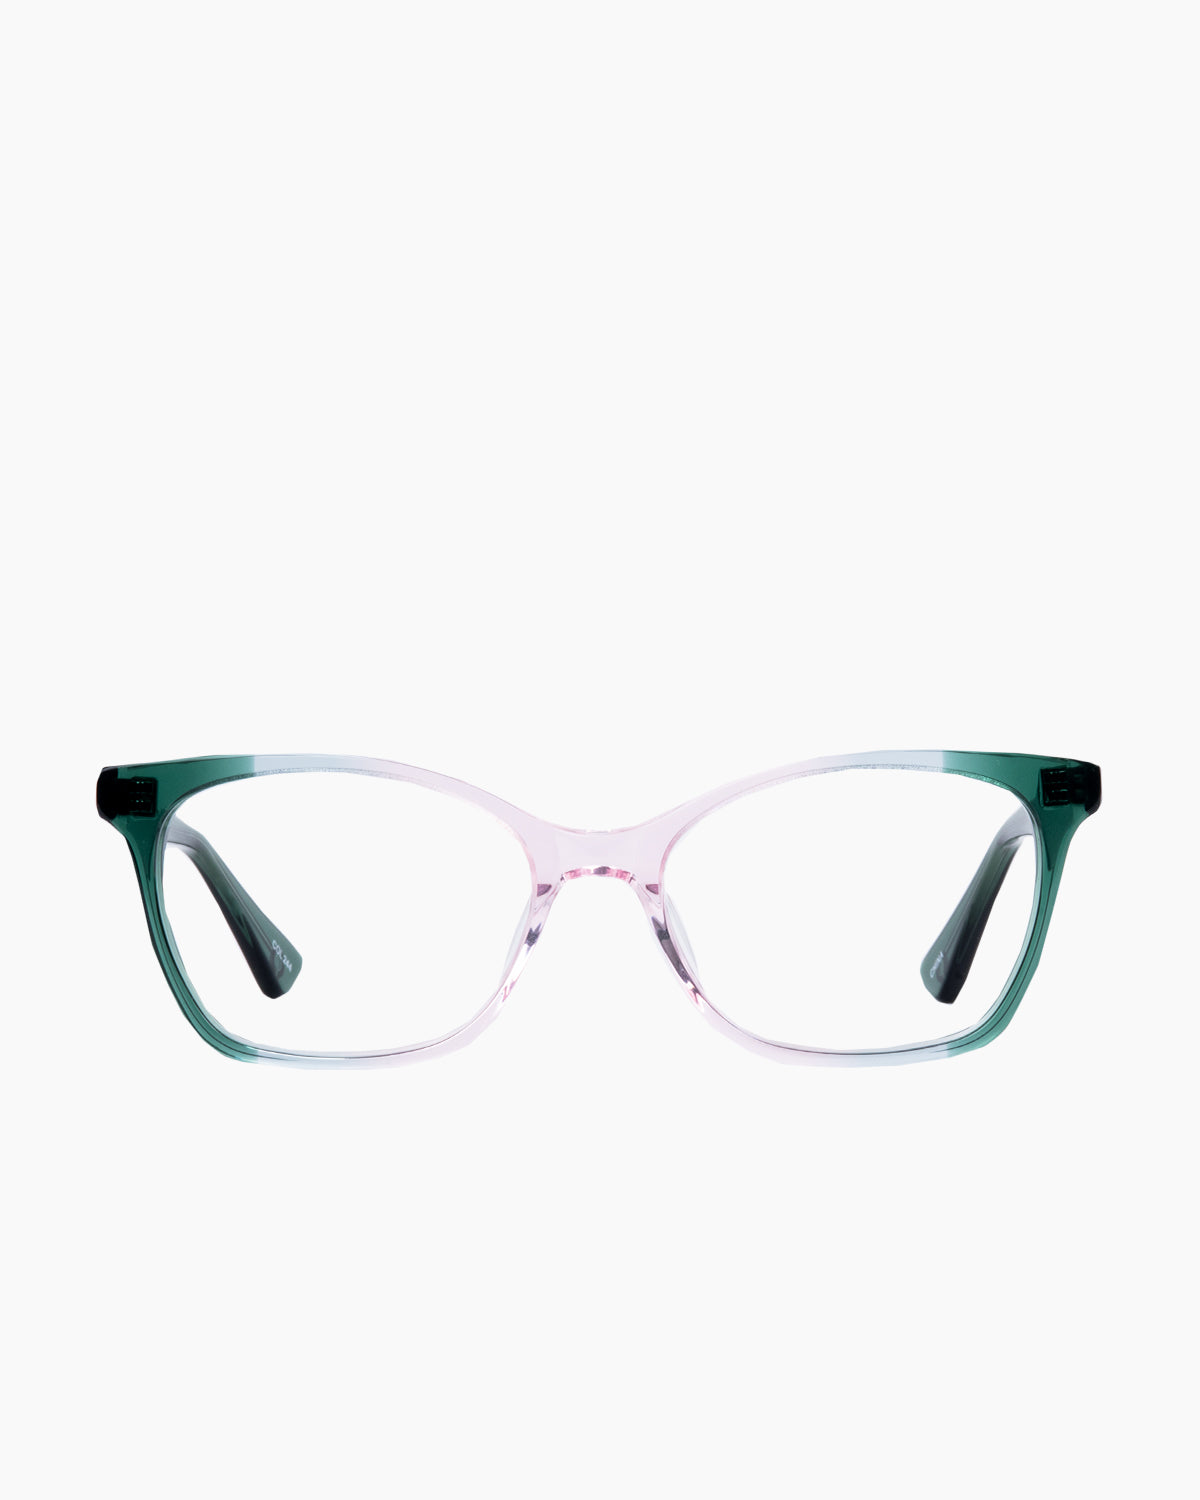 Evolve - Sophia - 244 | glasses bar:  Marie-Sophie Dion